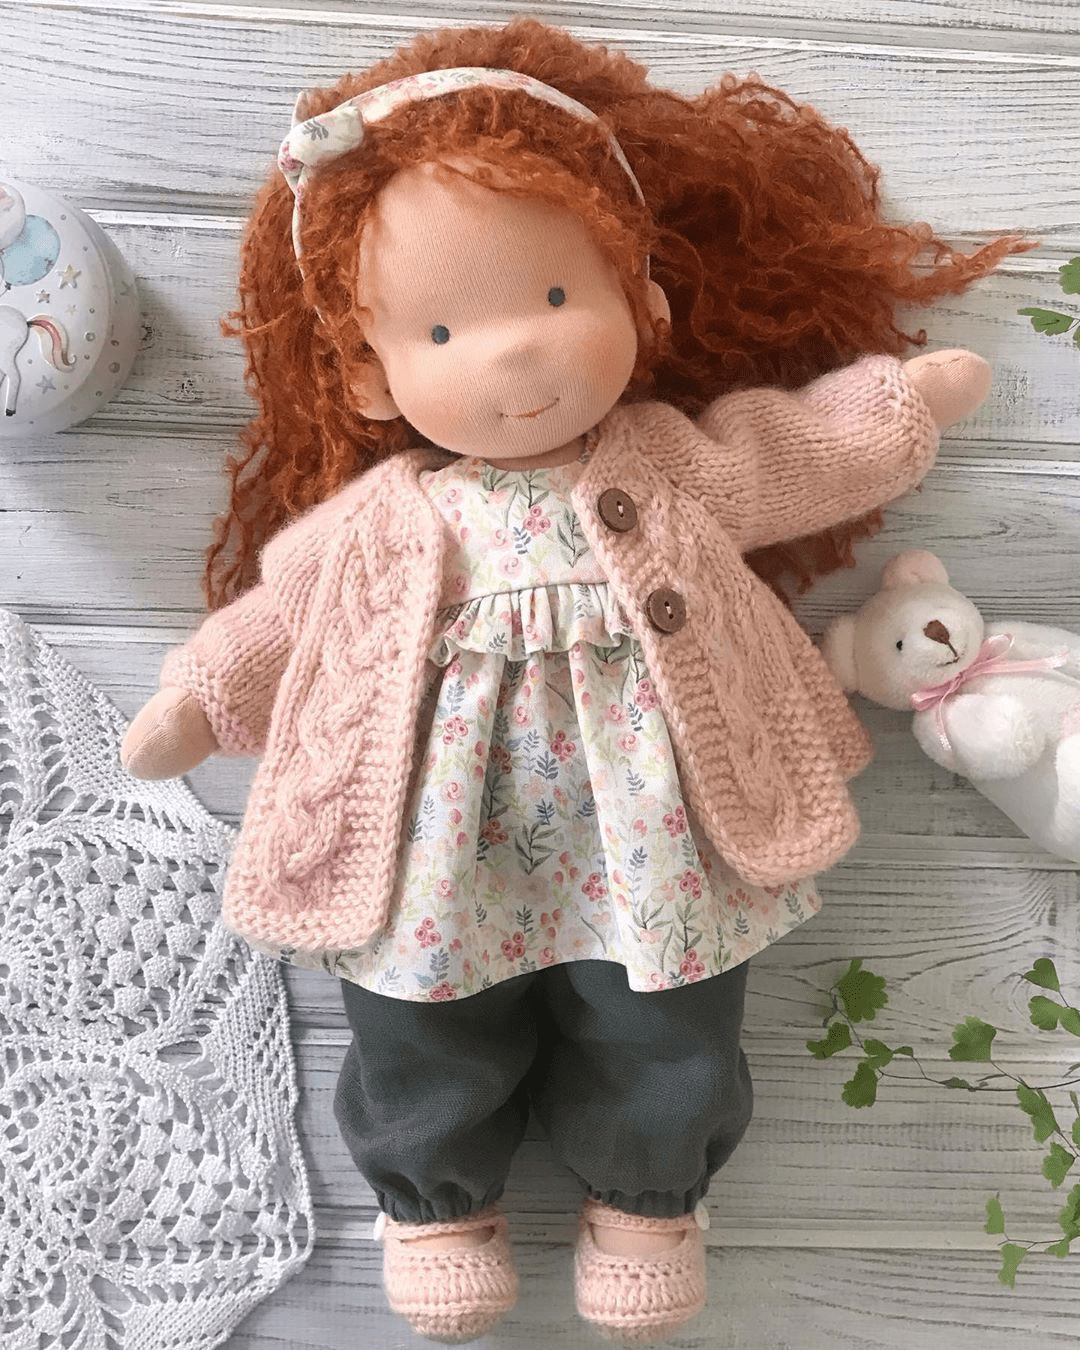 Waldorf style soft baby doll